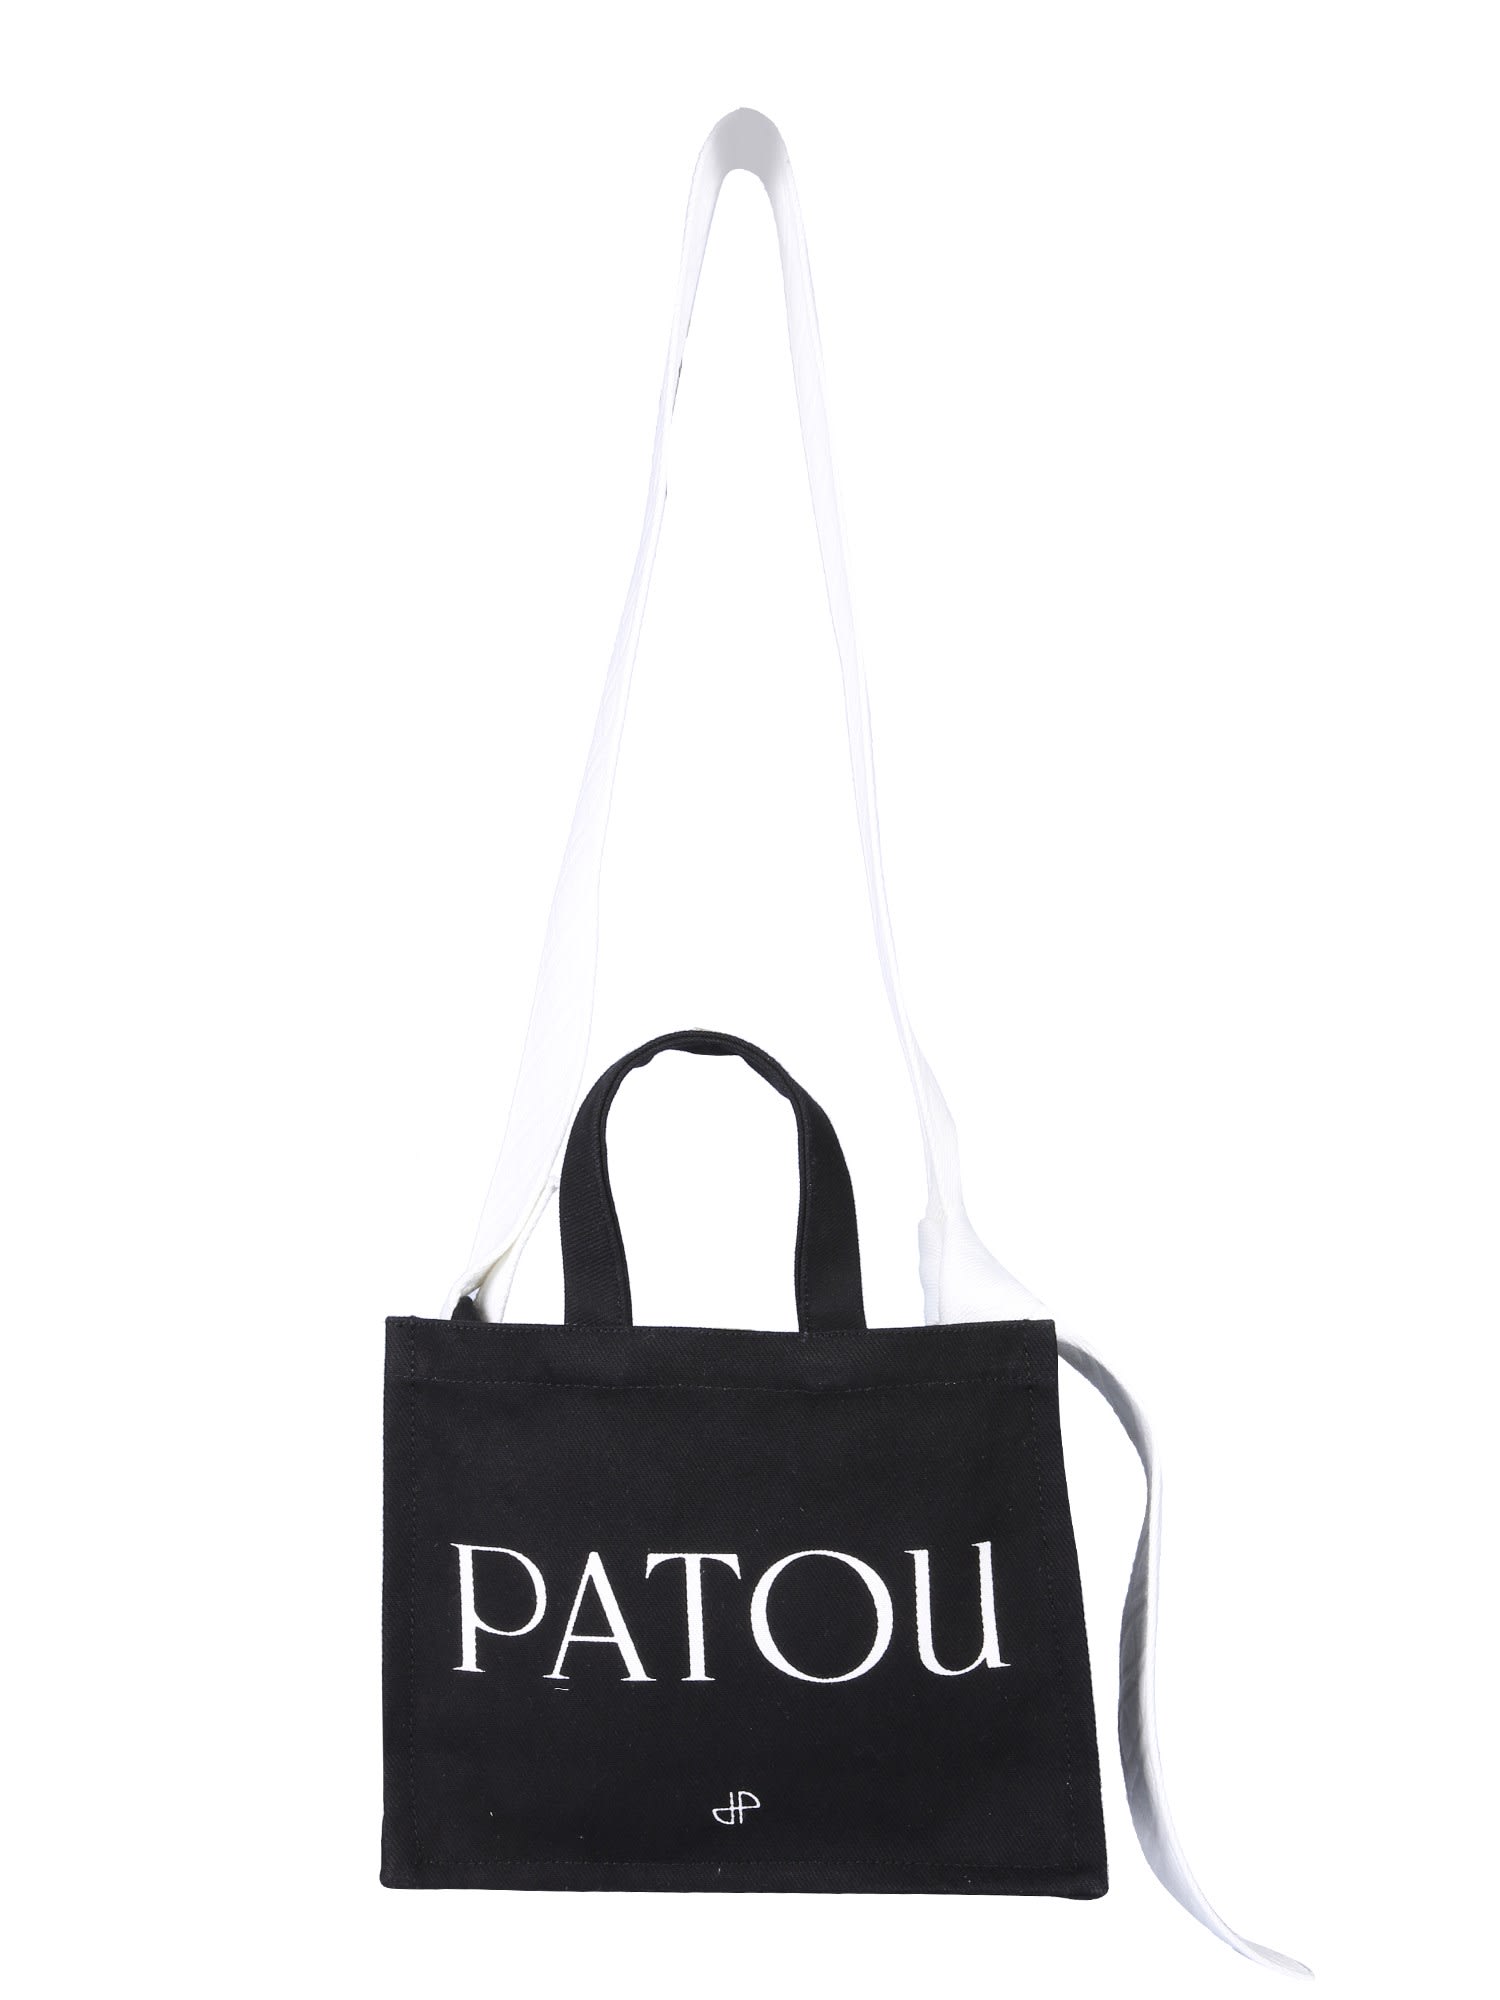 PATOU TOTE BAG WITH LOGO PRINT